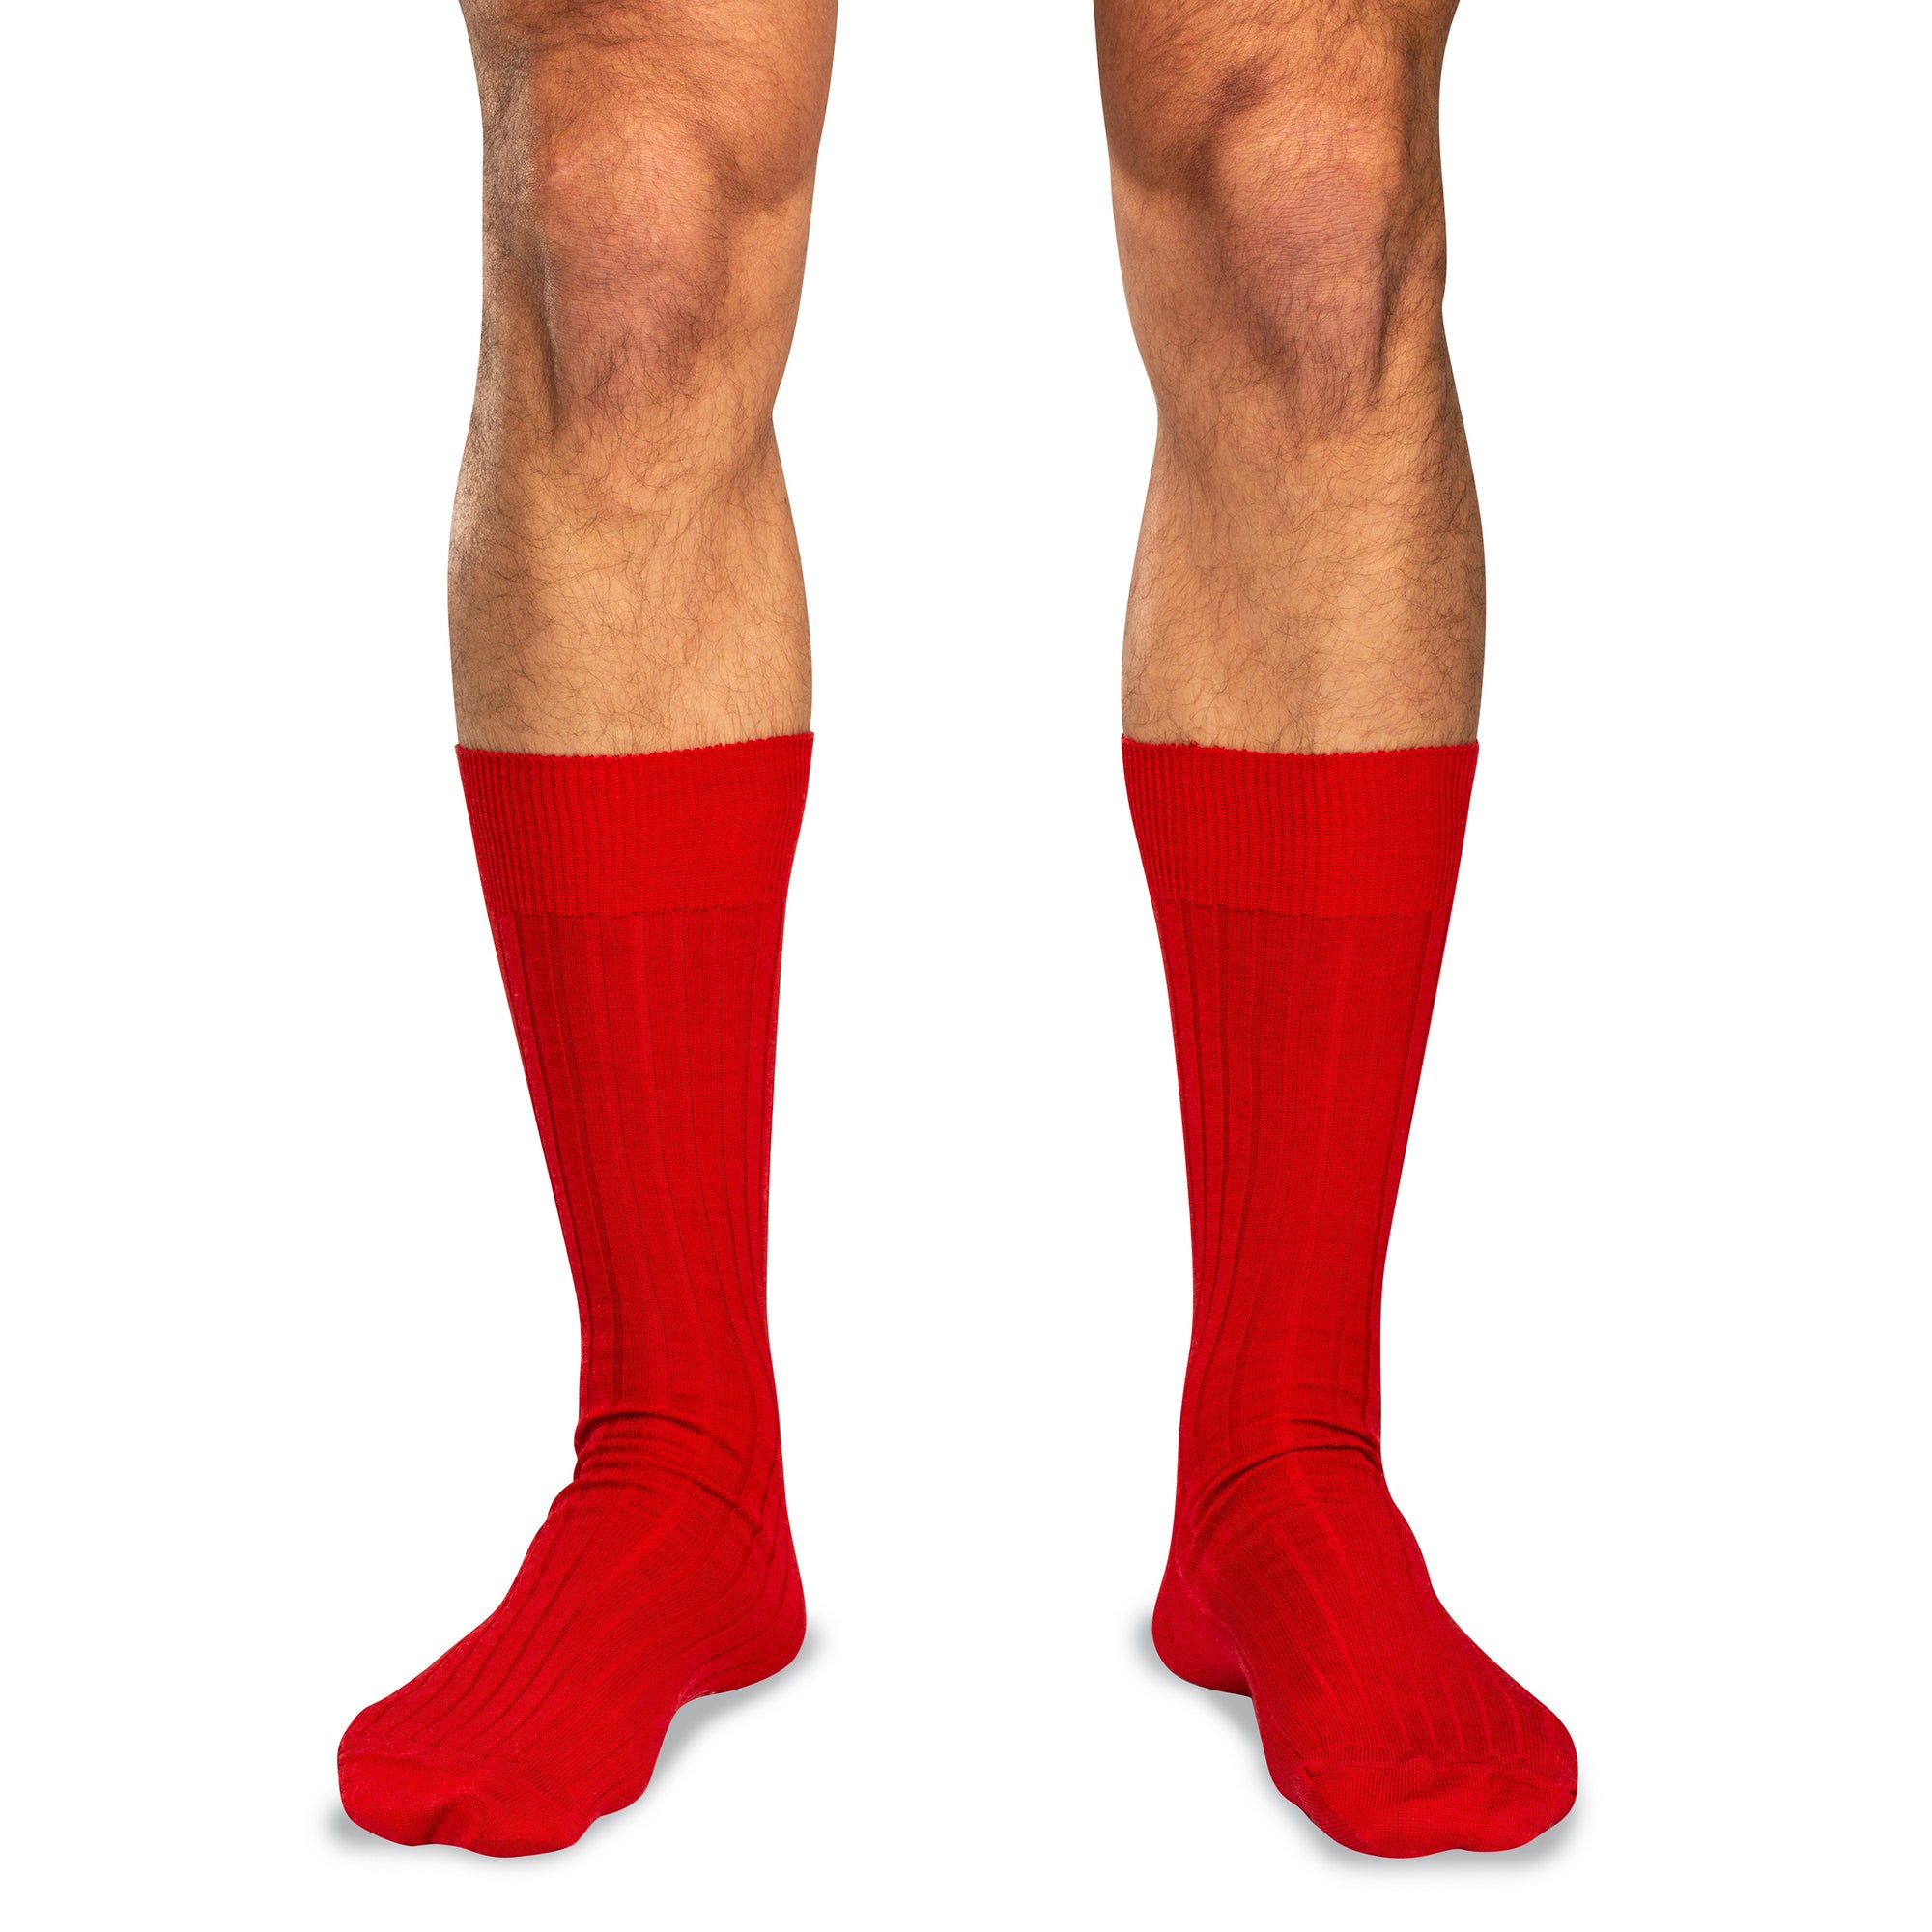 model wearing bright red men's dress socks